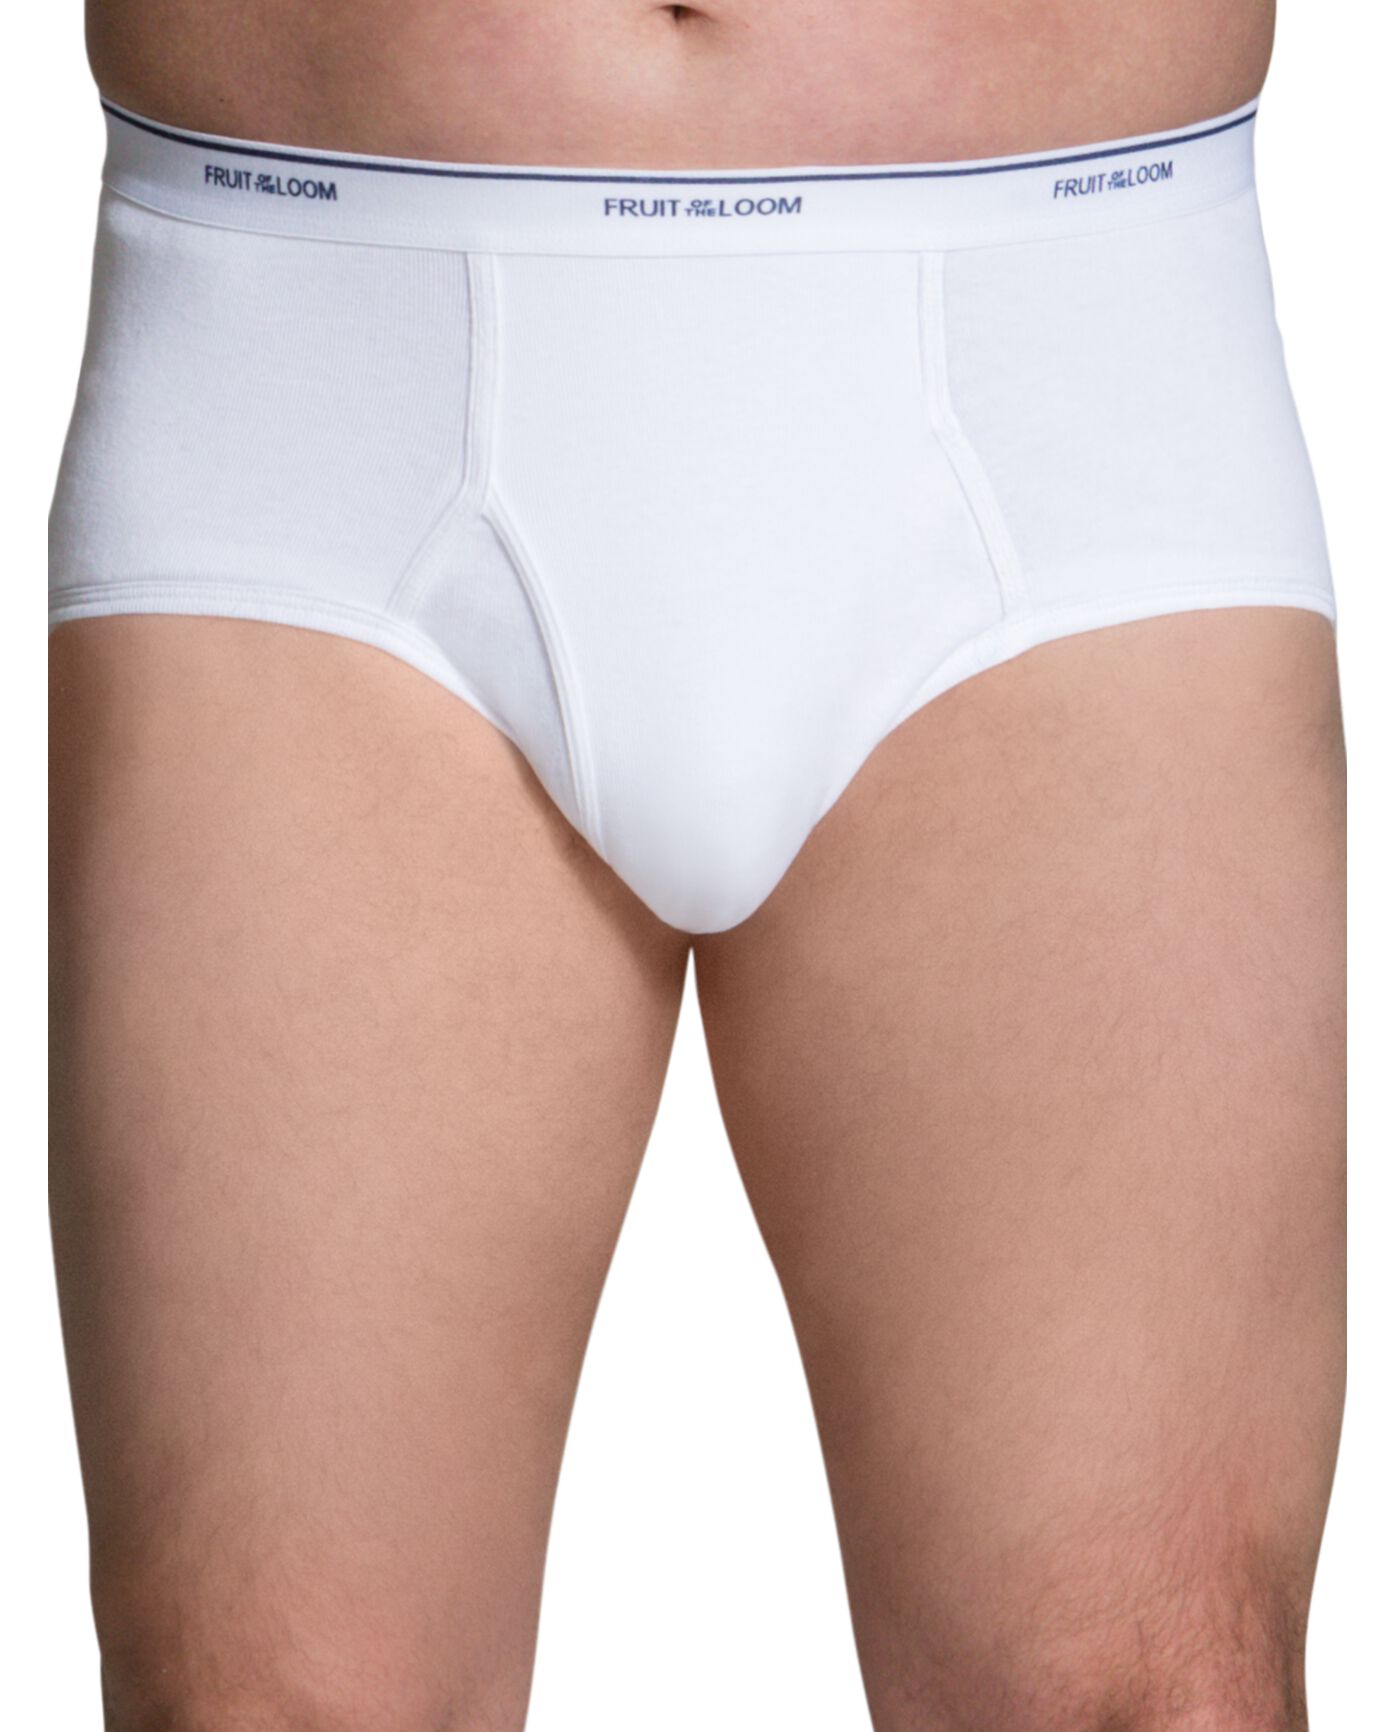 Hanes Women's Cotton Boy Brief Panties, Assorted Colors, Size 8 6 ct